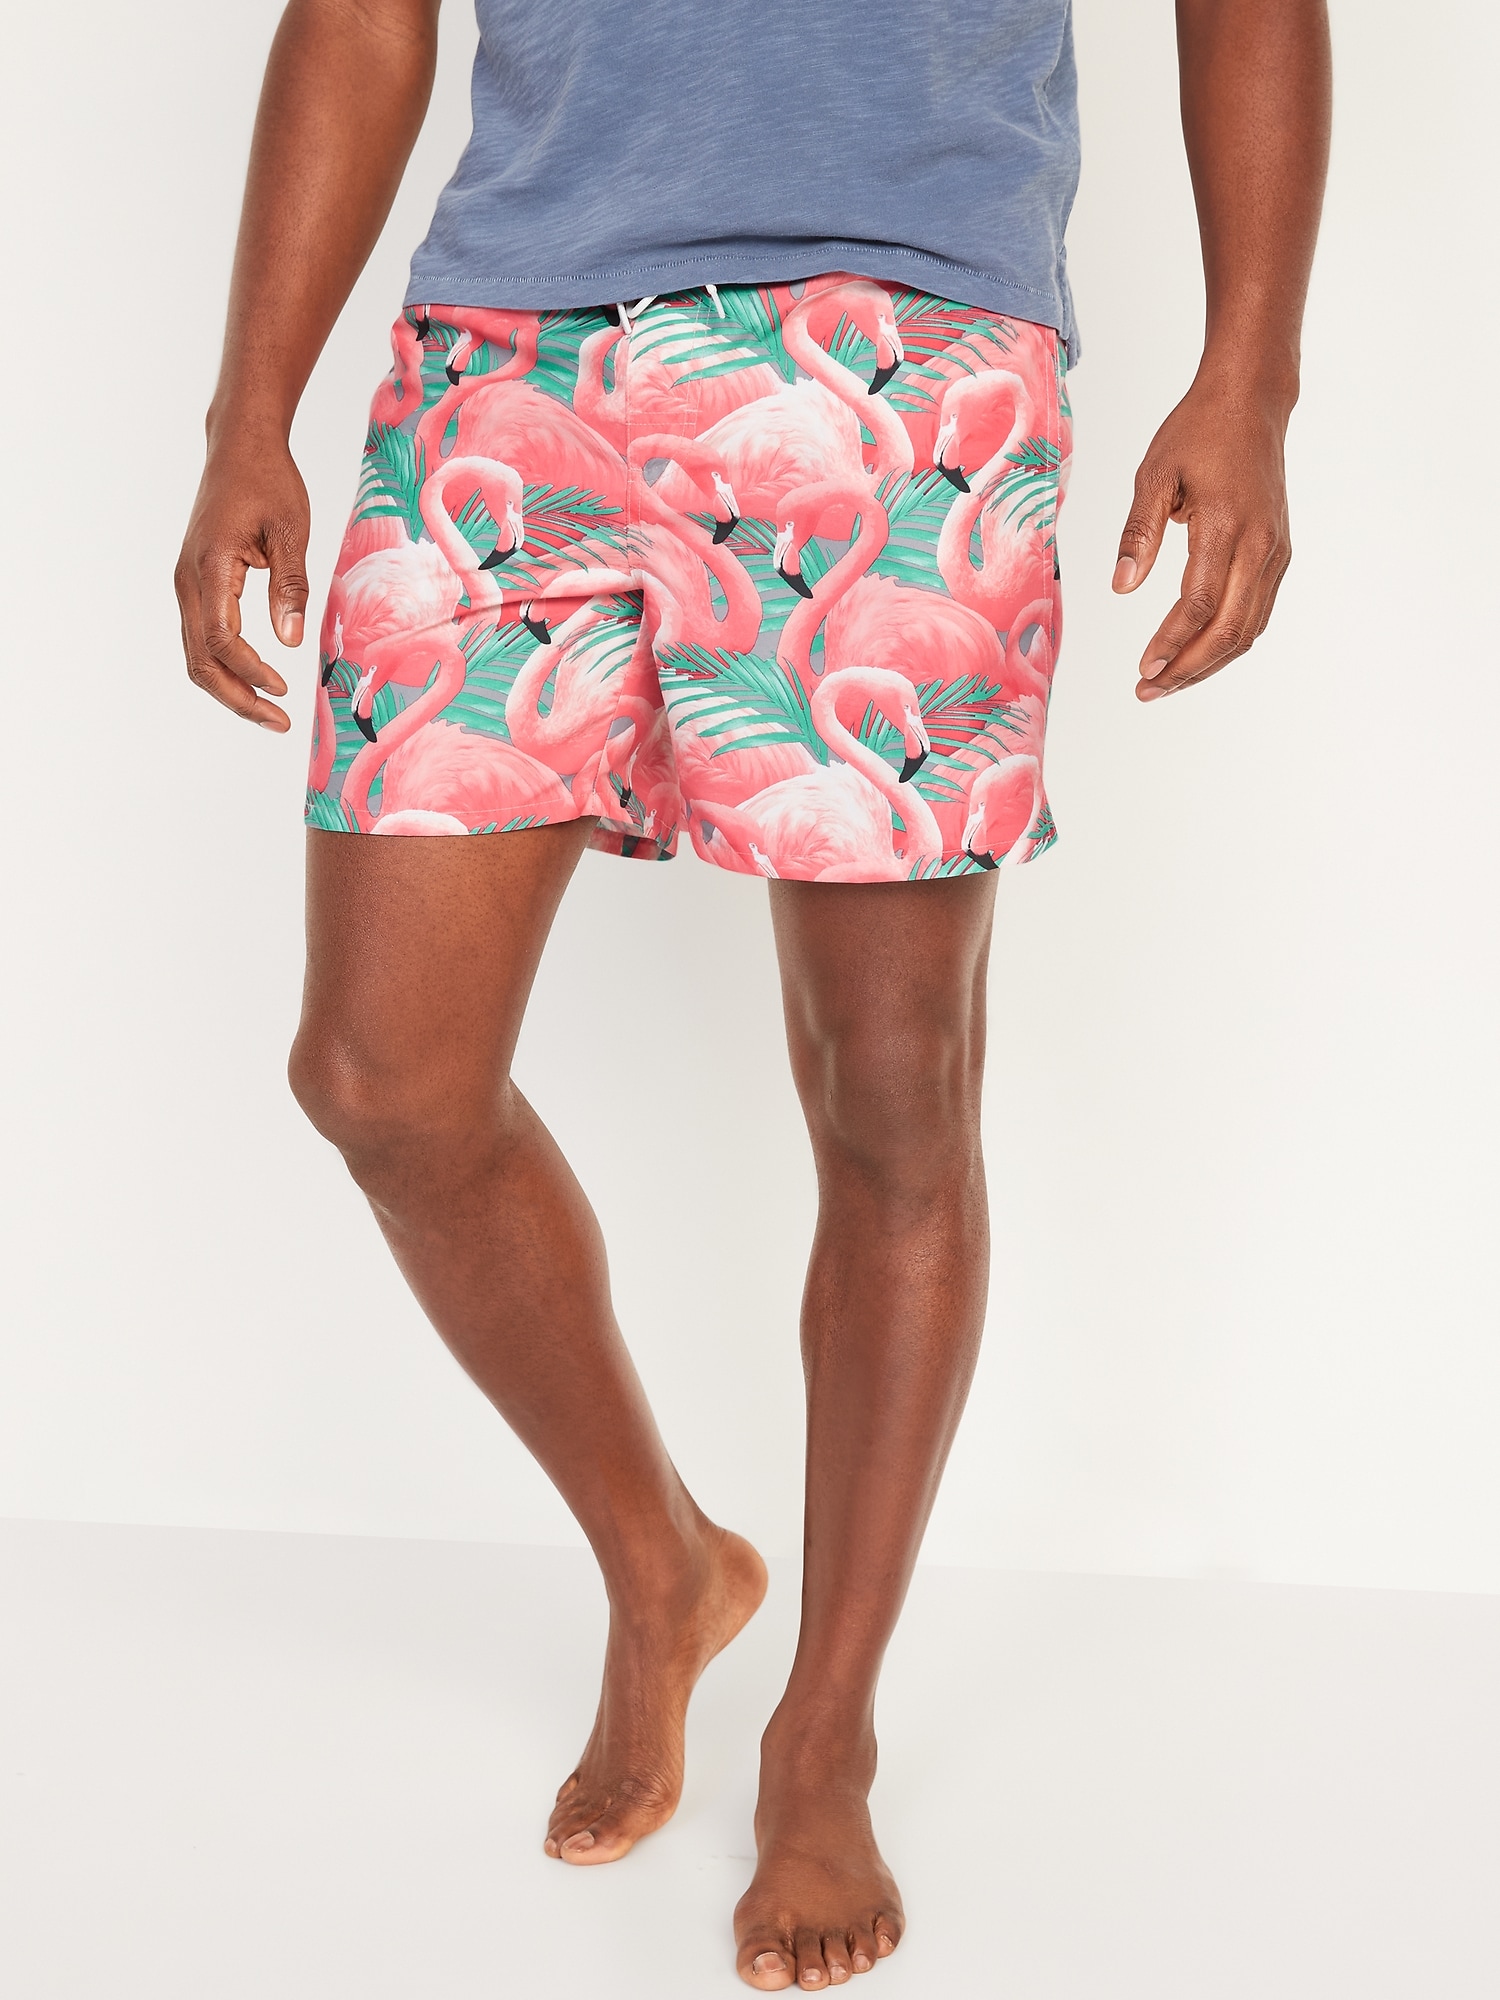 a man wearing flamingo print swimming trunks